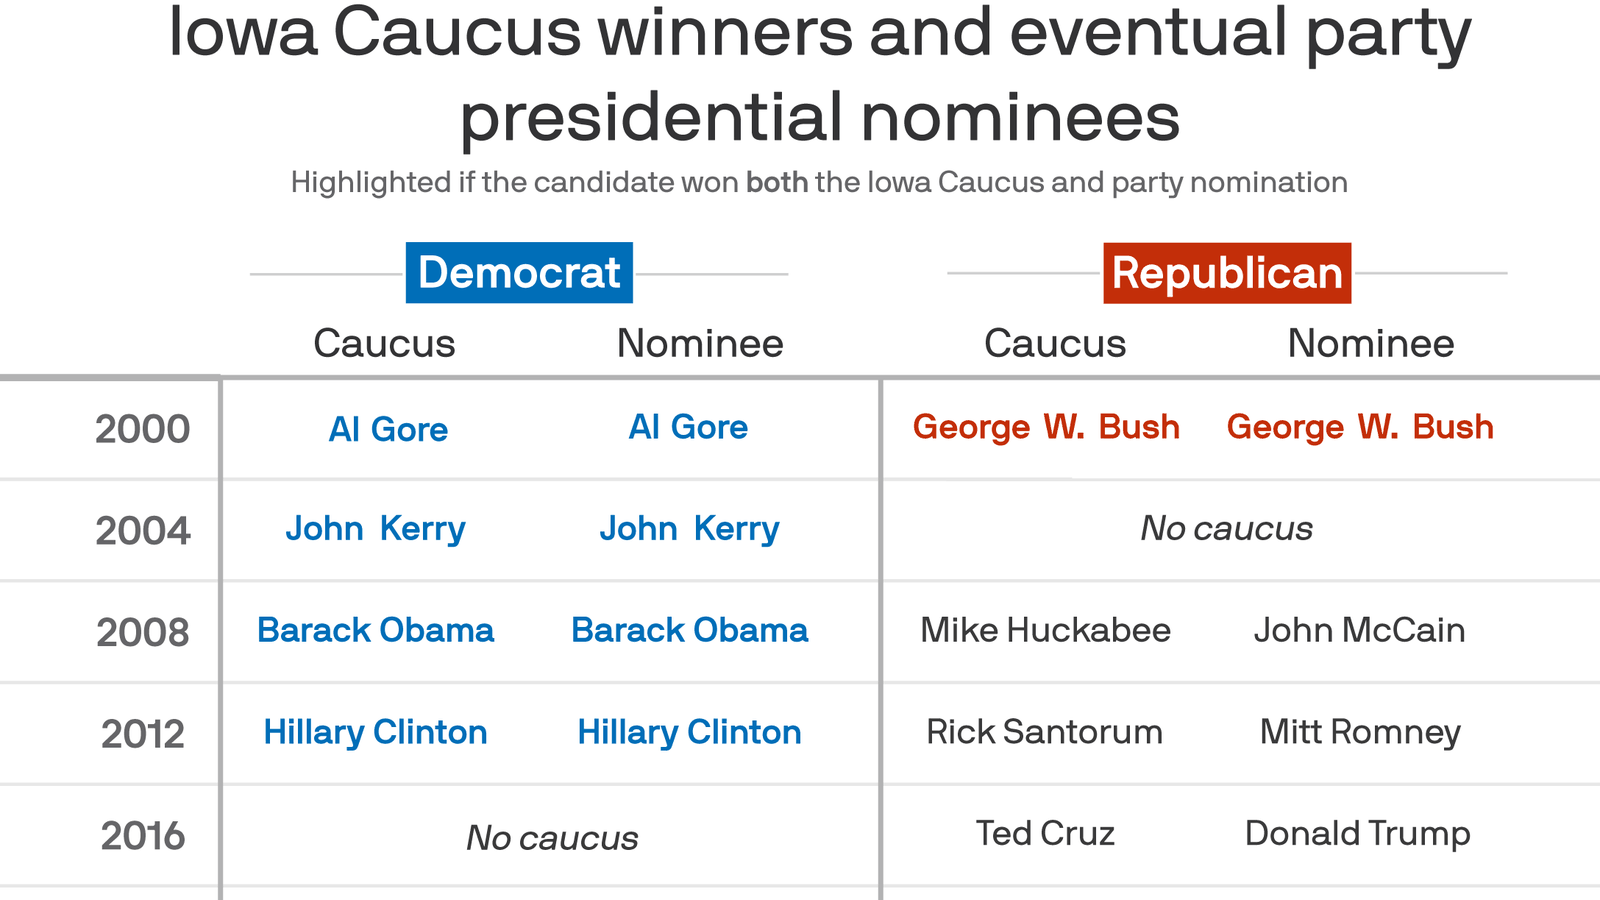 Gary Lawson Kabar Who Won Iowa Caucus 2016 Results